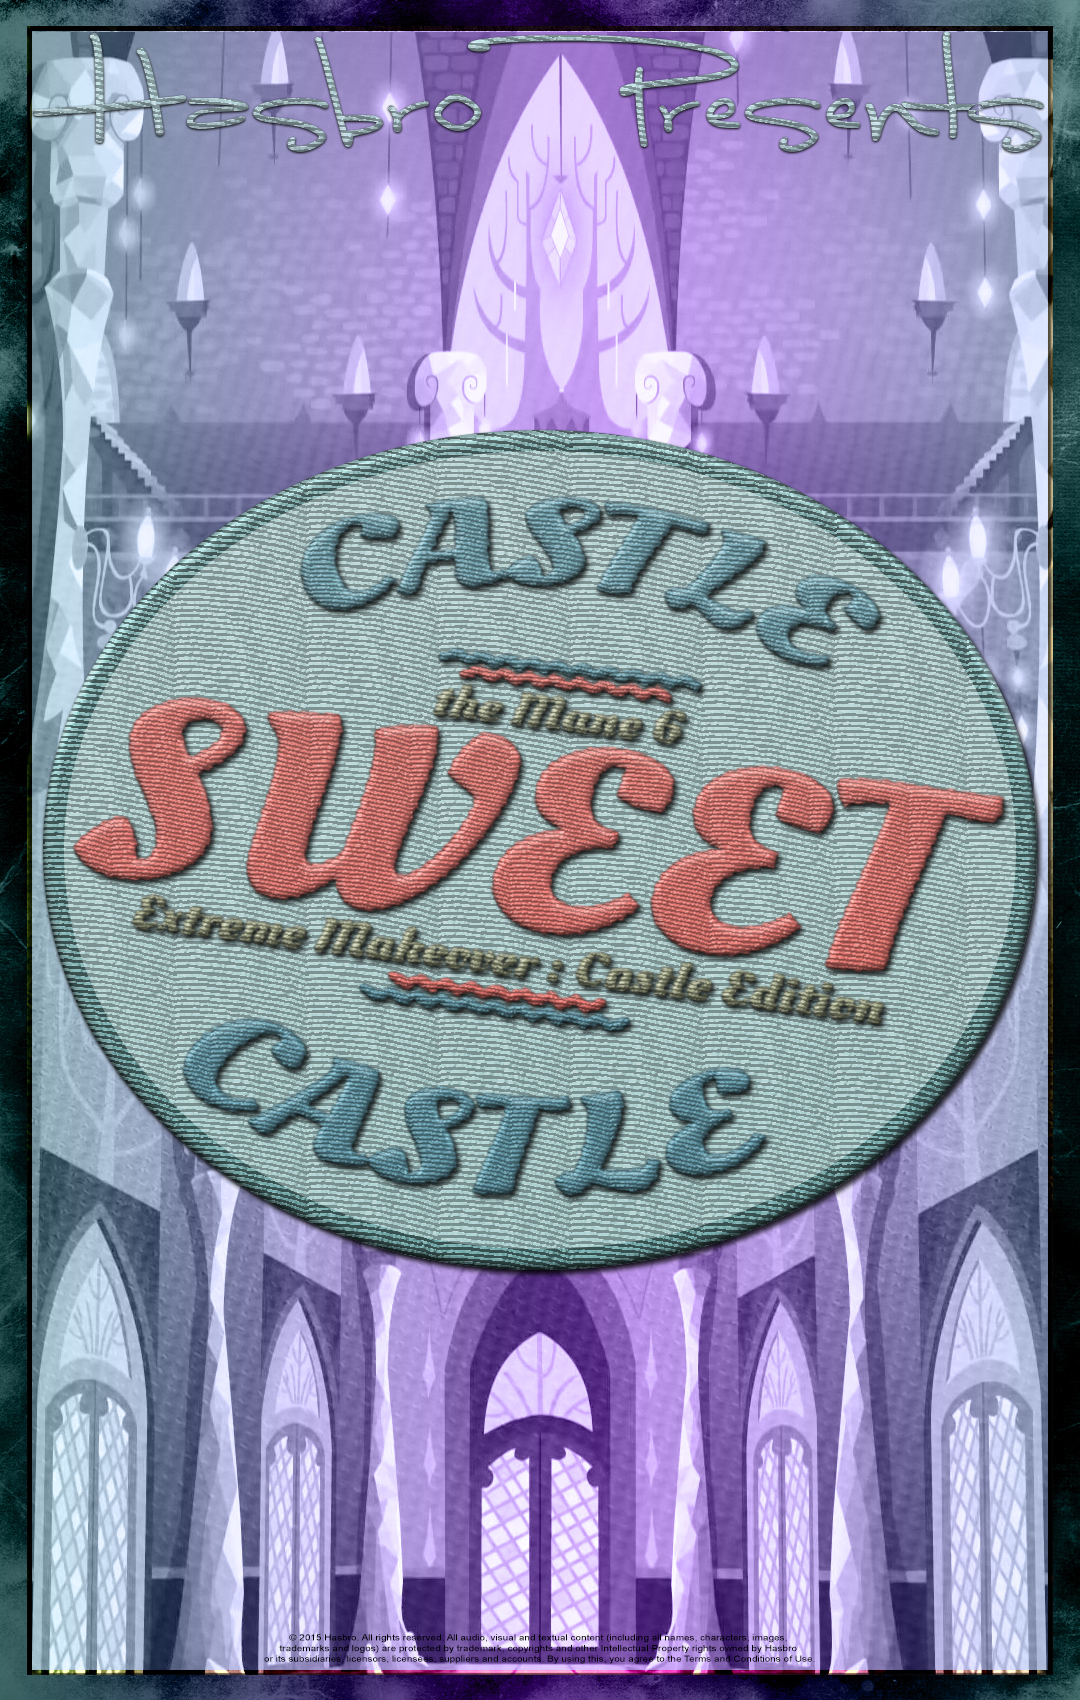 mlp___castle_sweet_castle___movie_poster_by_pims1978-d8pccpr.jpg